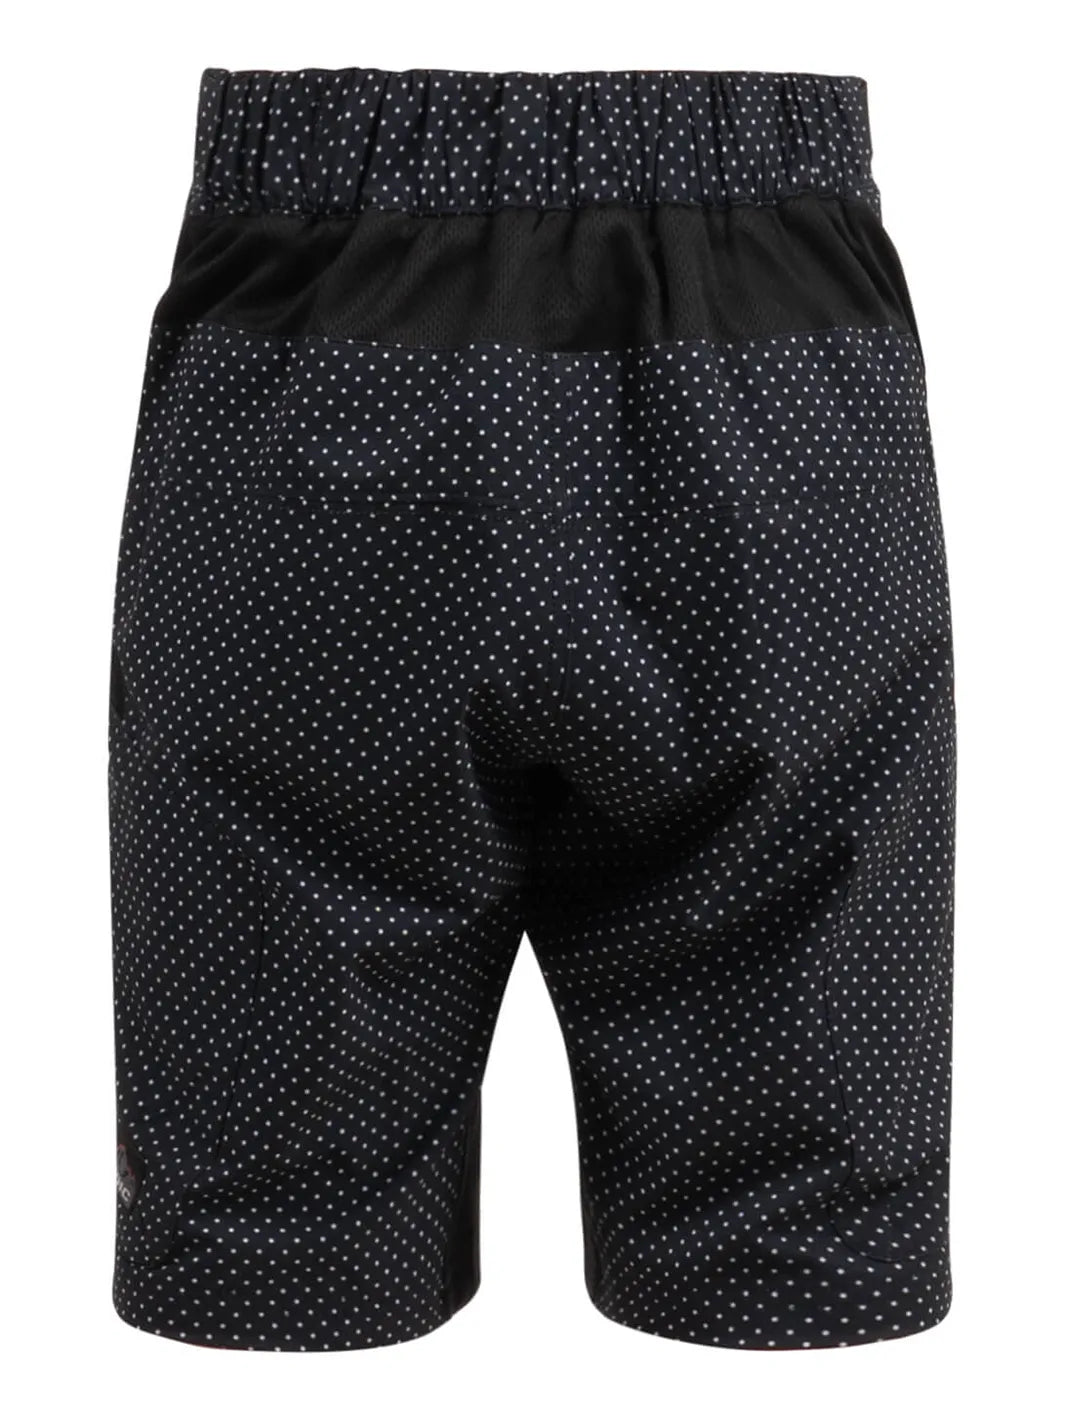 Black Polka Dot Ether Jr Shorts#color_black-polka-dot